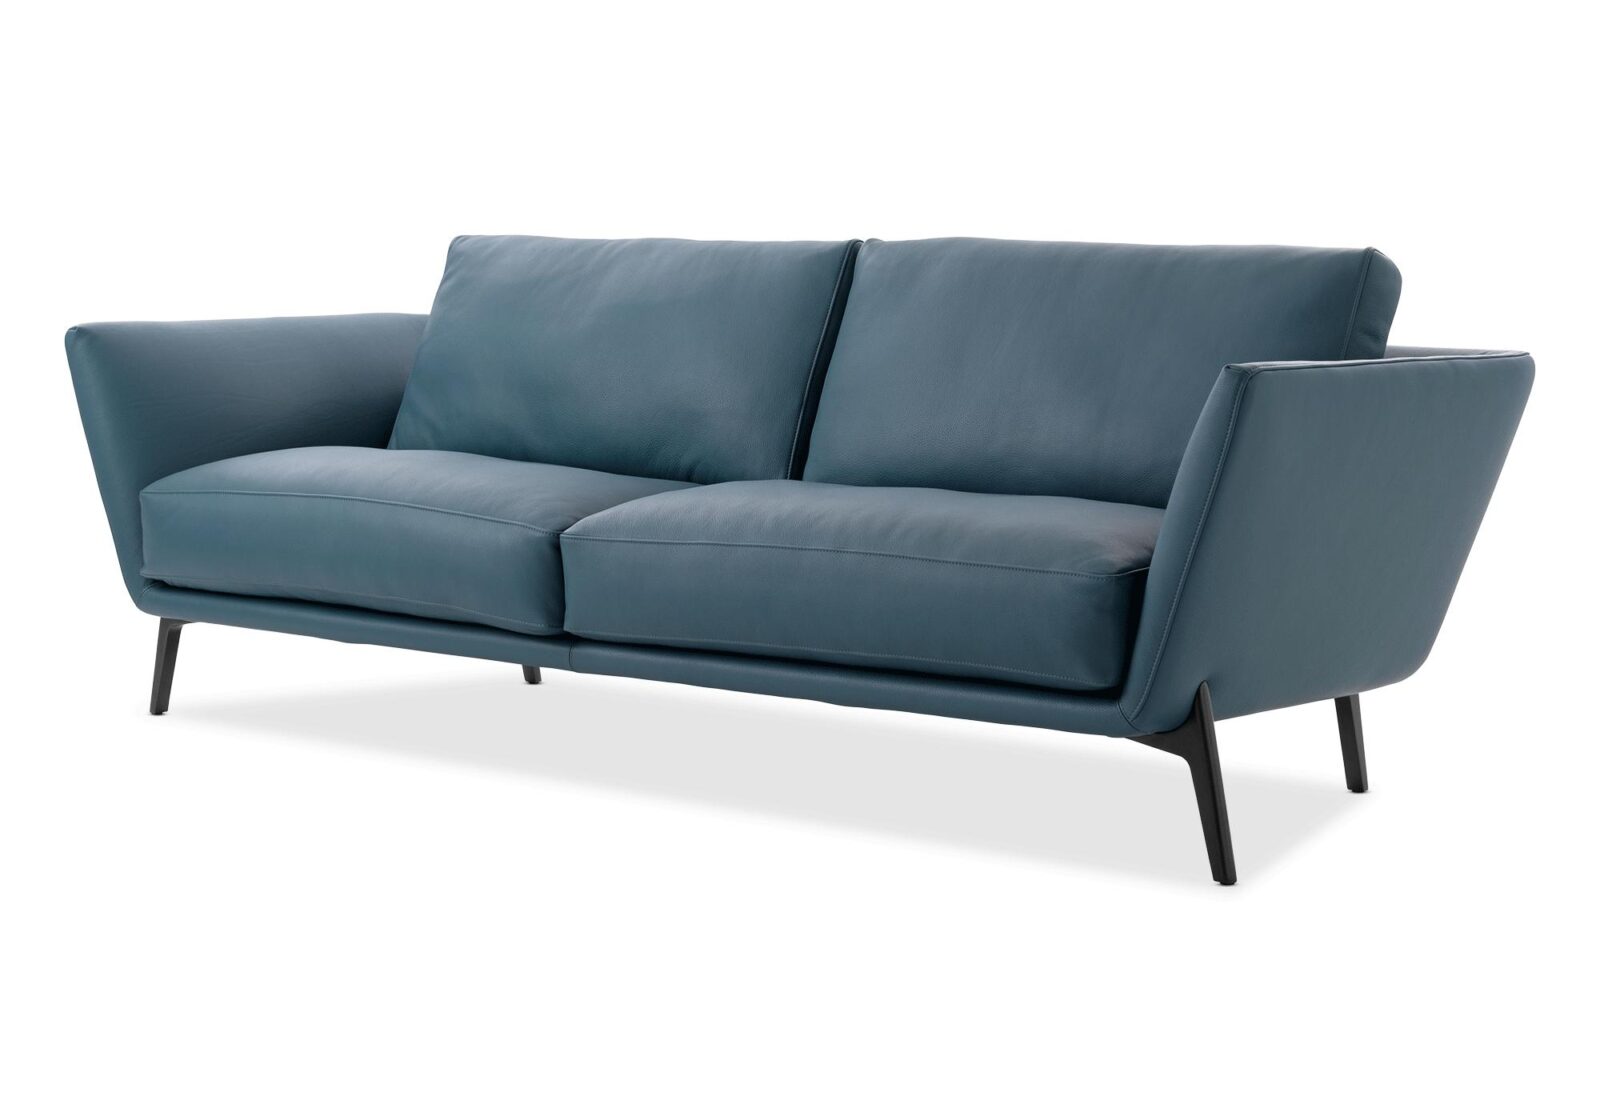 3er Sofa Rego inkl. lose Kissen. Bezug: Leder. Farbe: Petrolgrün. Erhältlich bei Möbel Gallati.